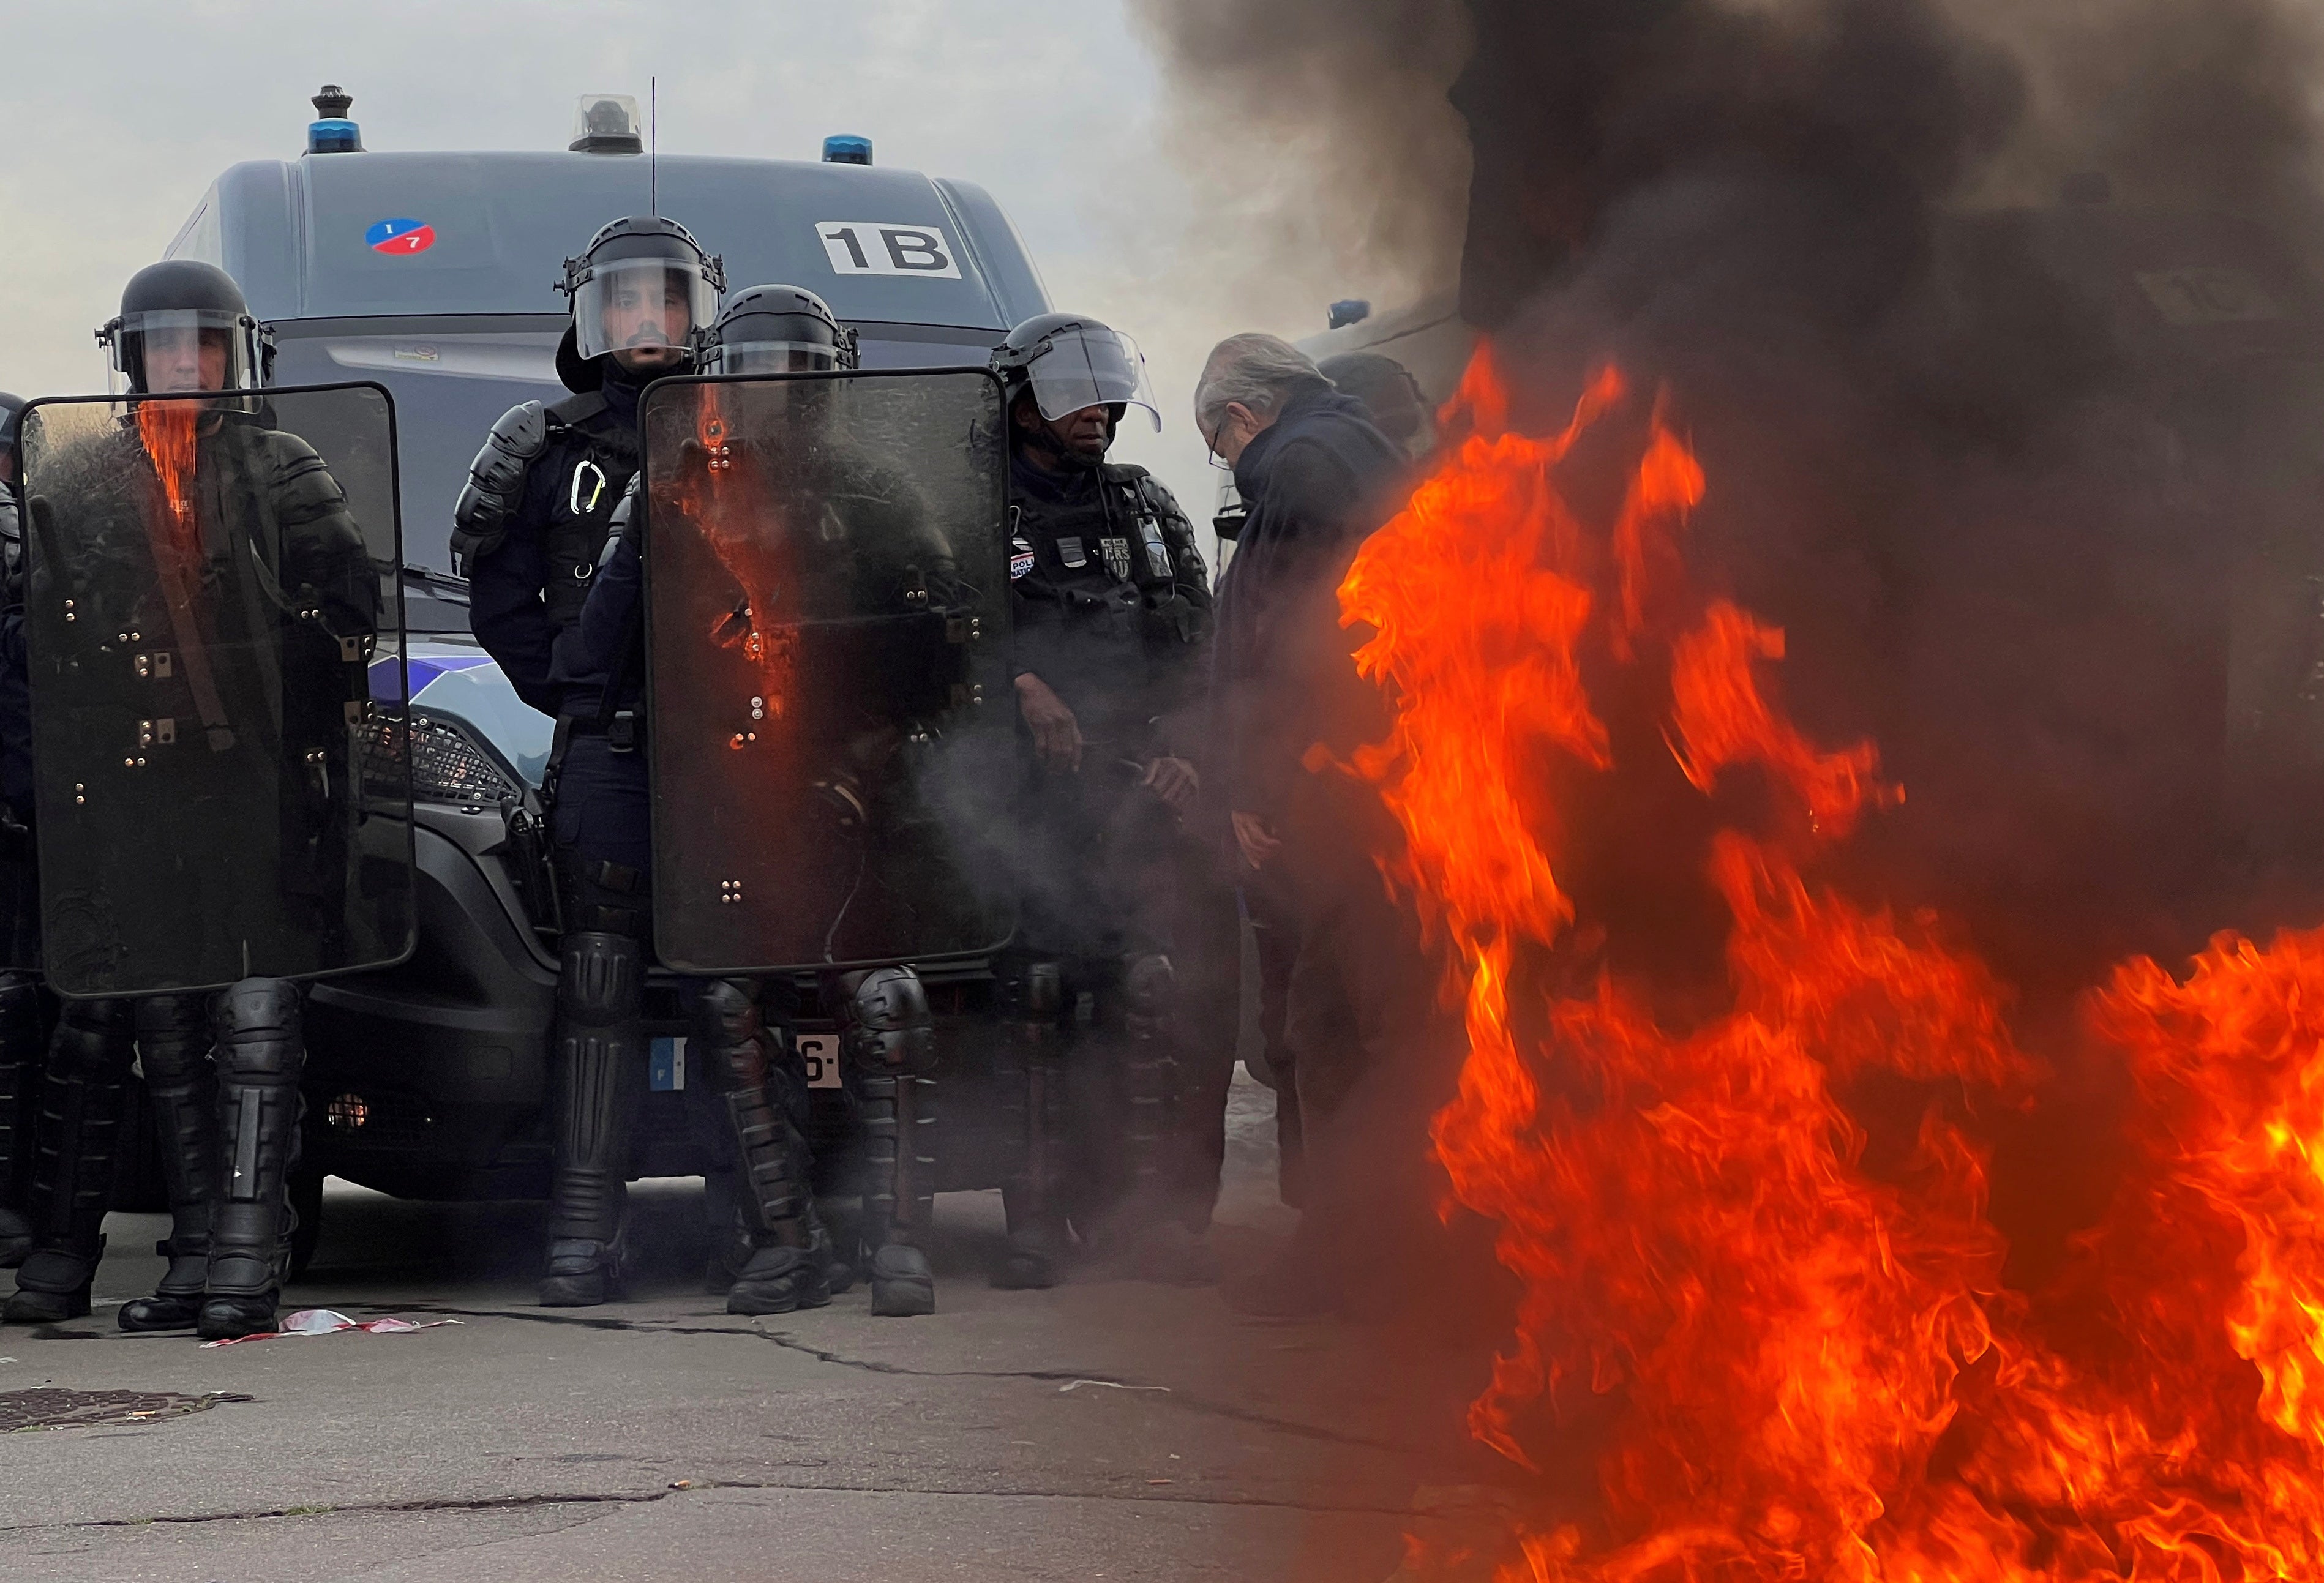  France retirement protests: Paris bans gatherings near key sites to quell unrest